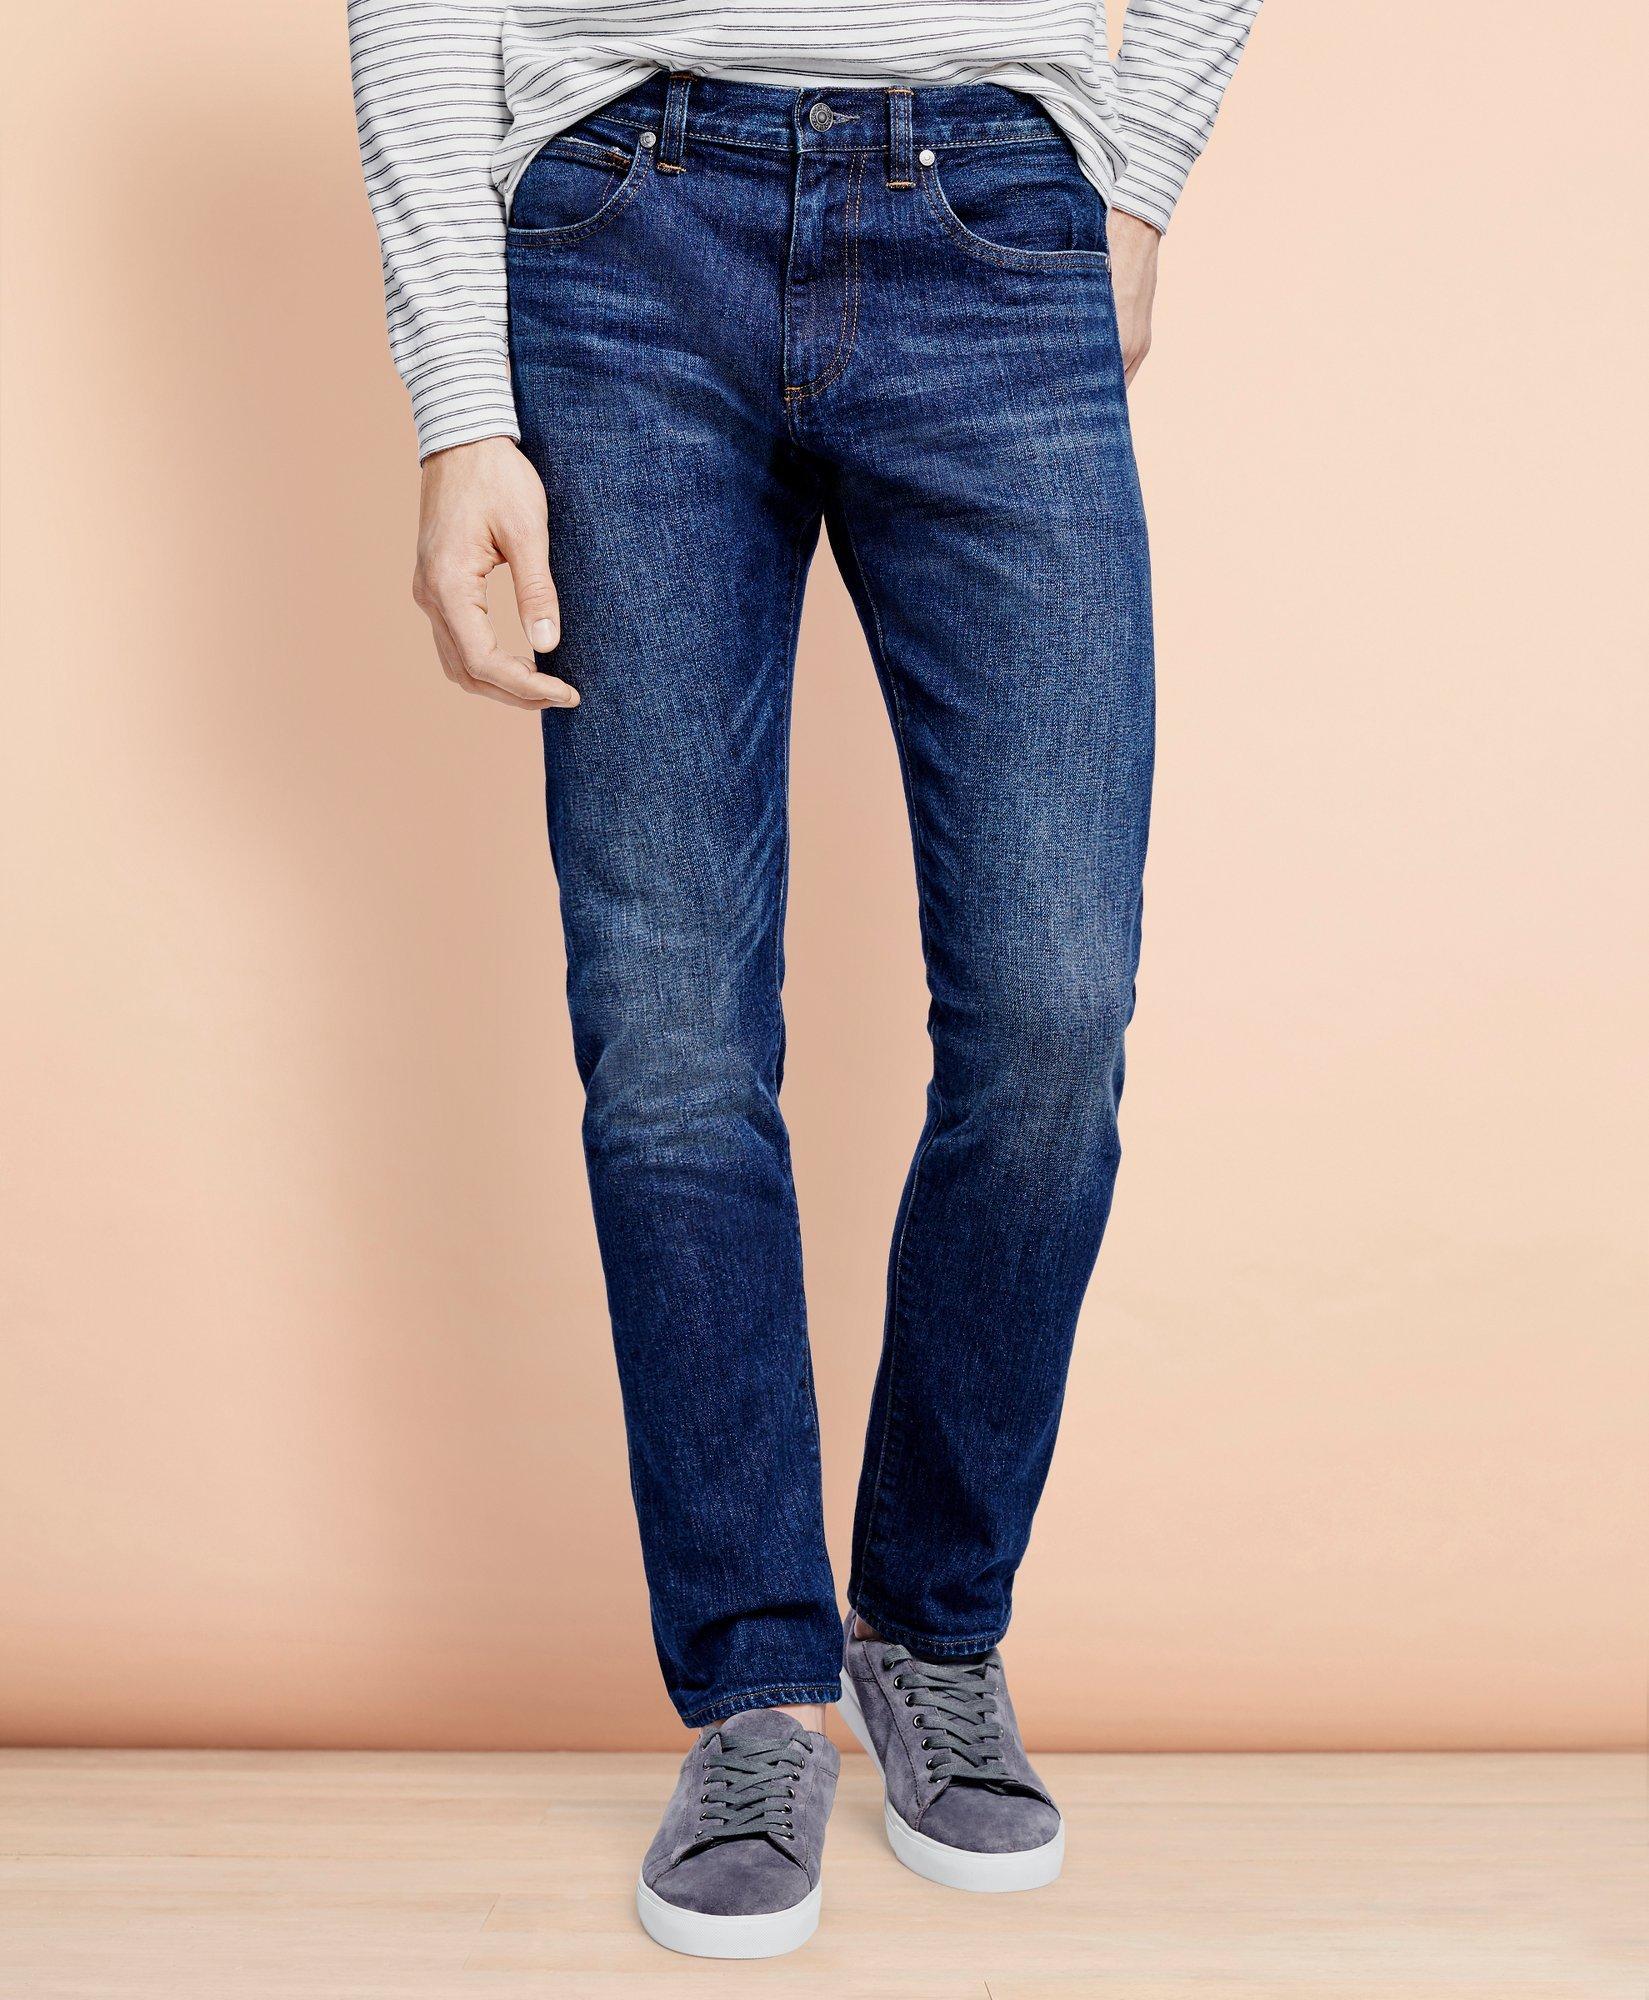 901 Slim Straight Jeans in Indigo Denim, image 1